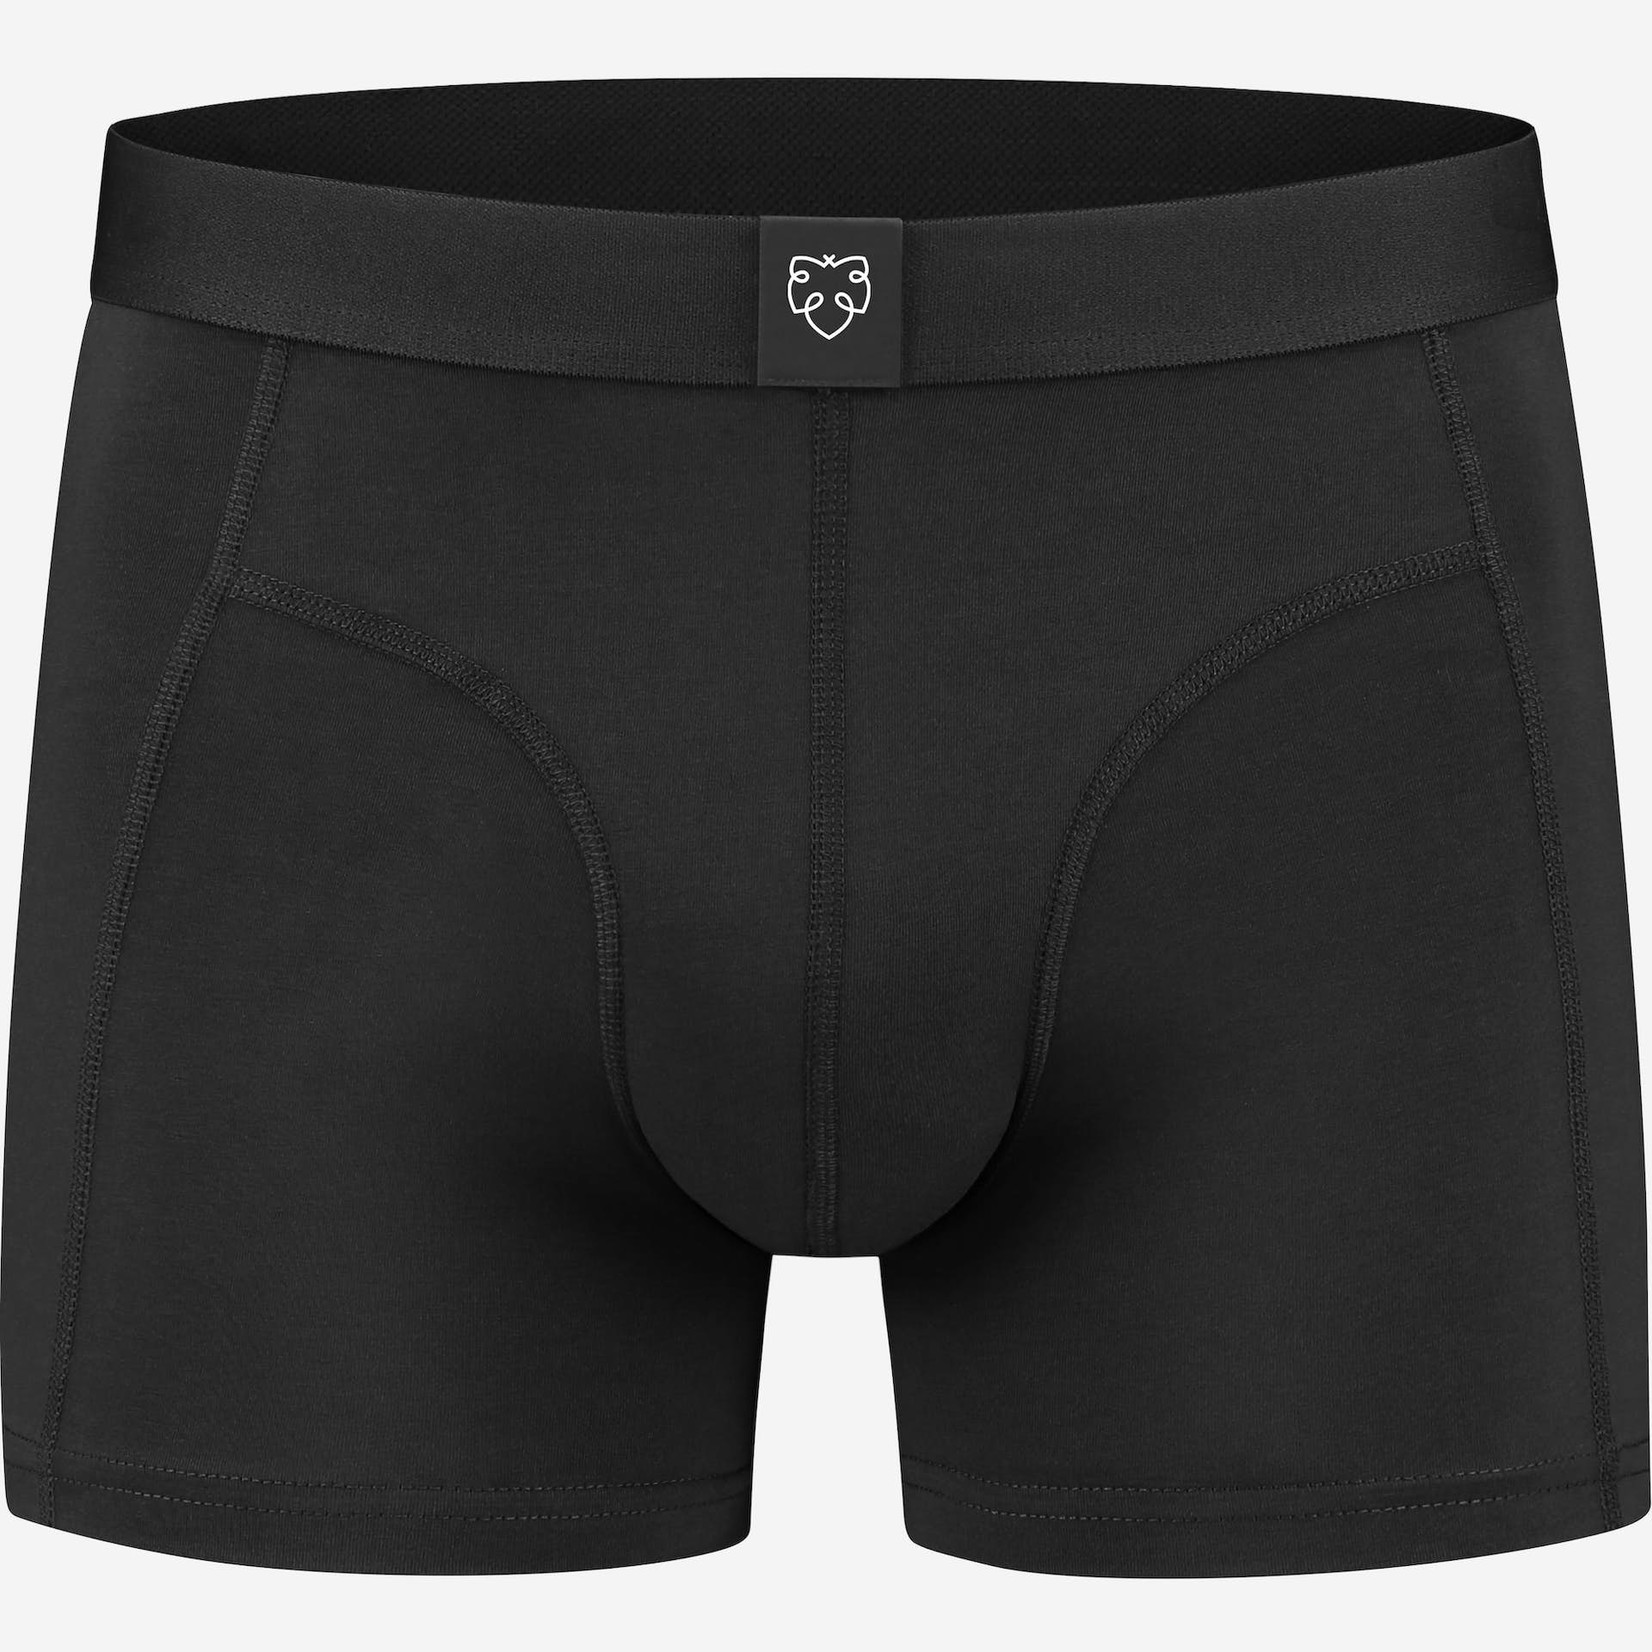 A-dam Underwear boxer Jelle 3-pack